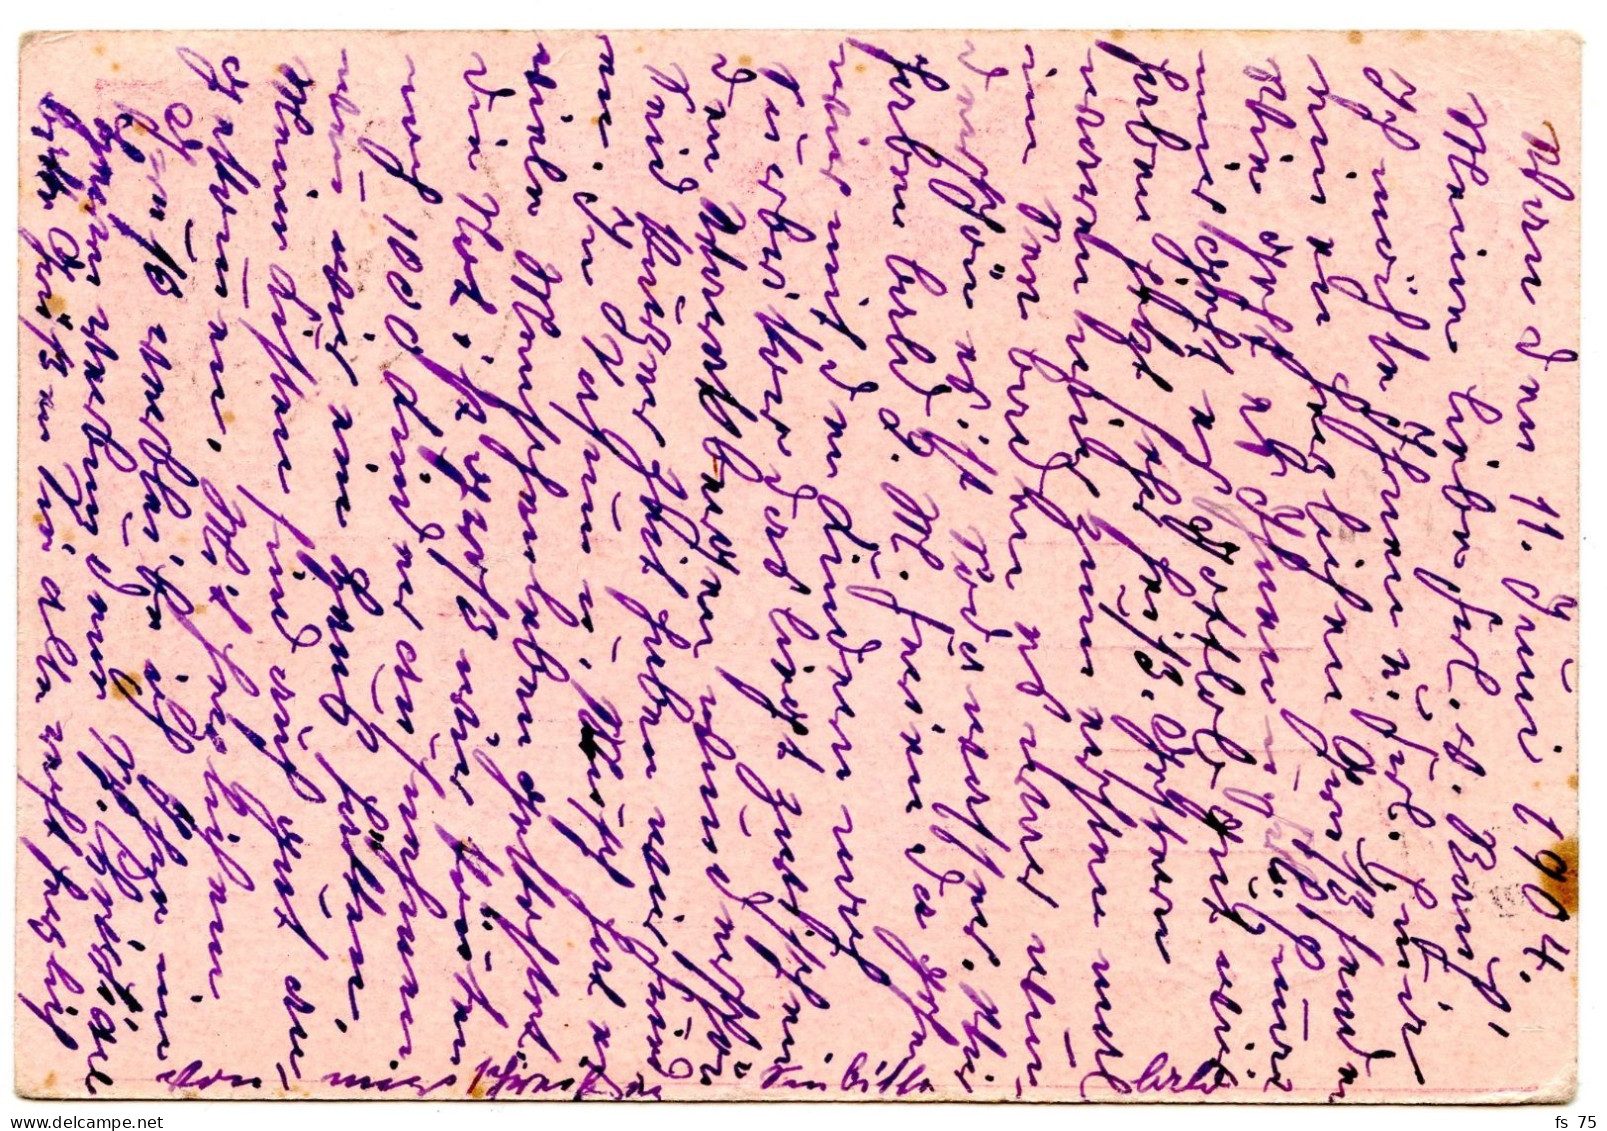 TURQUIE - ENTIER 20 P. DE VAN POUR ACHERN, 1904 - Briefe U. Dokumente